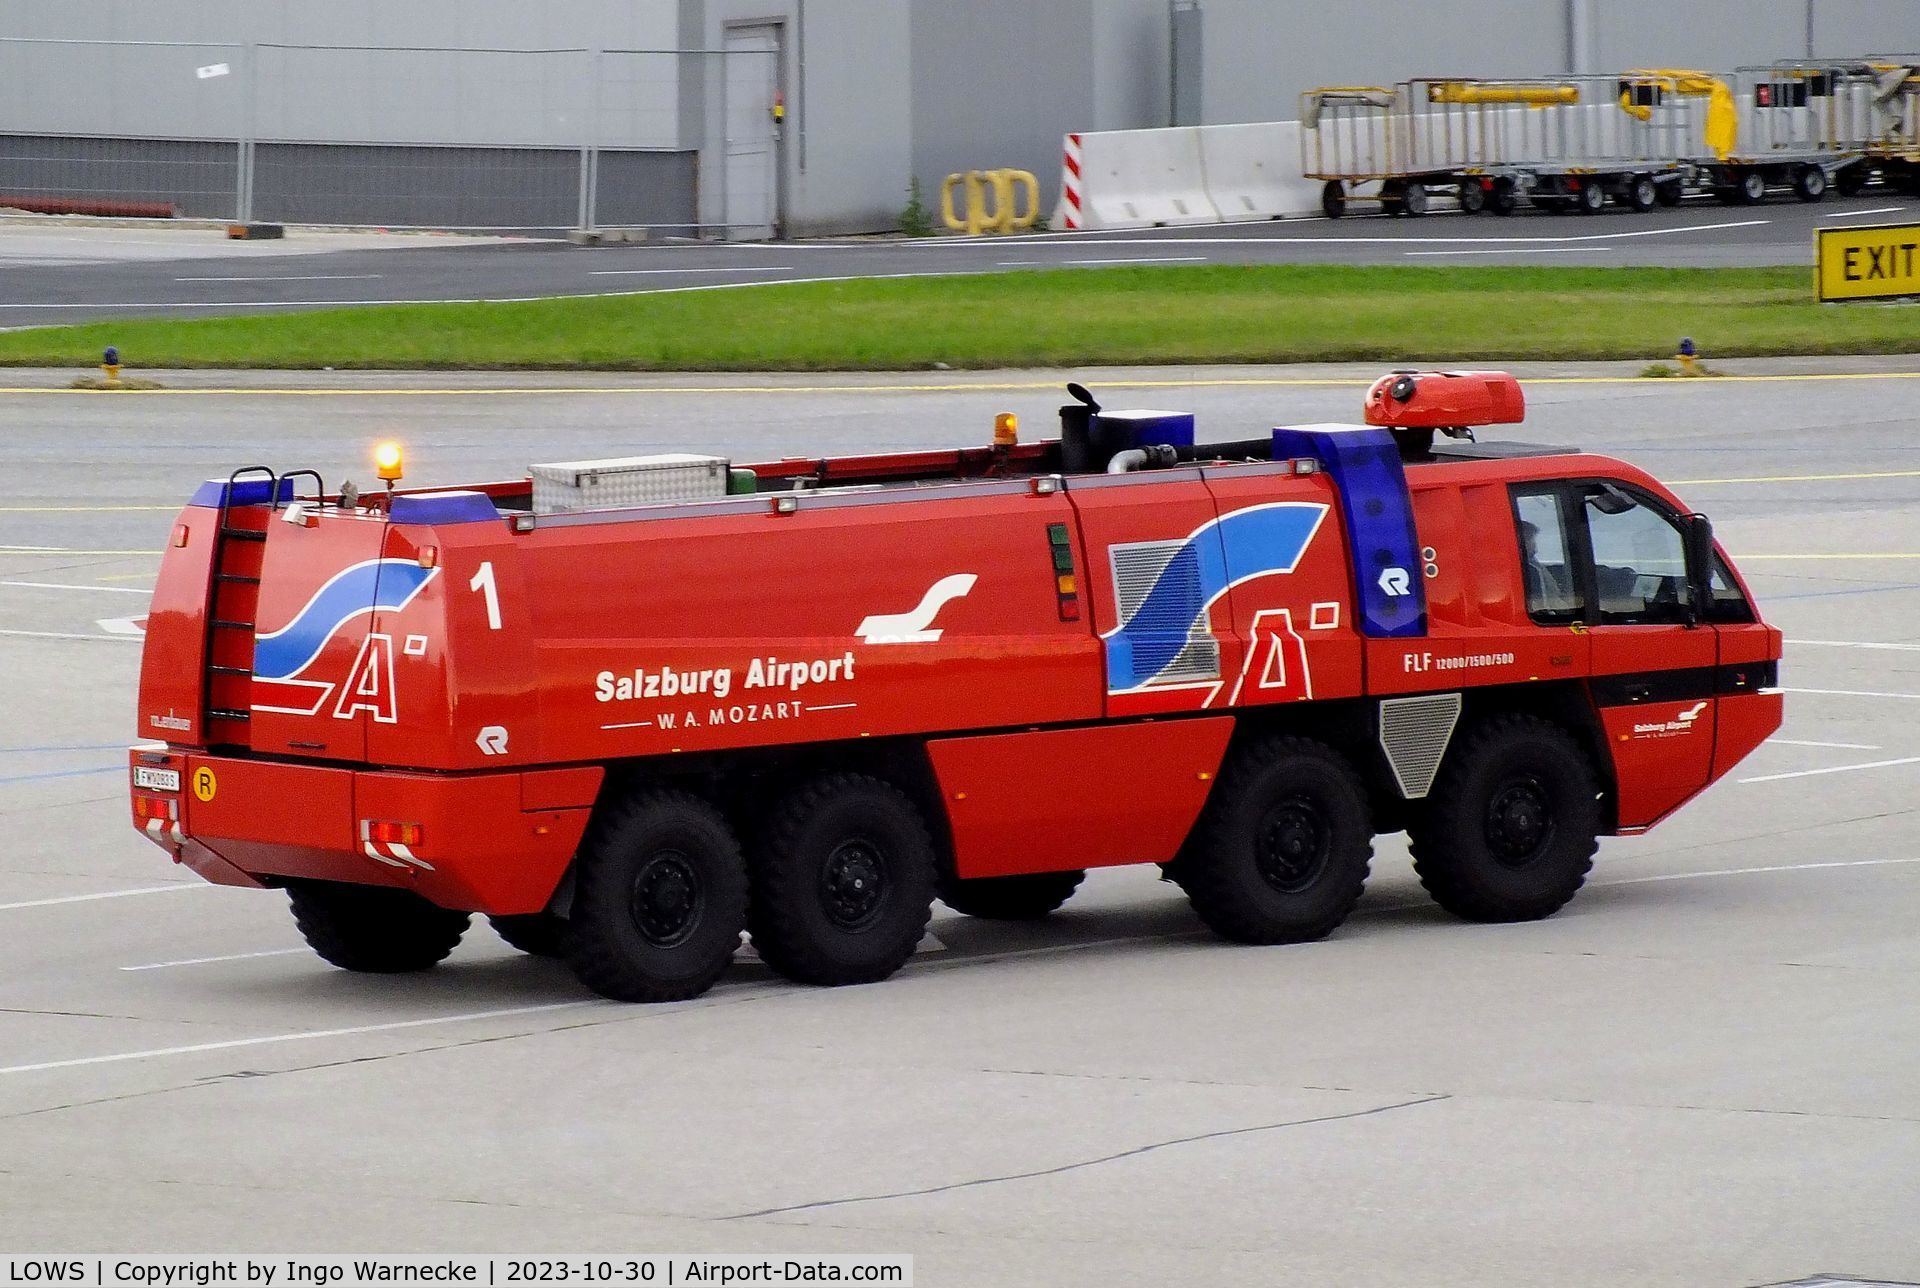 Salzburg Airport, Salzburg Austria (LOWS) - airport fire truck at Salzburg airport